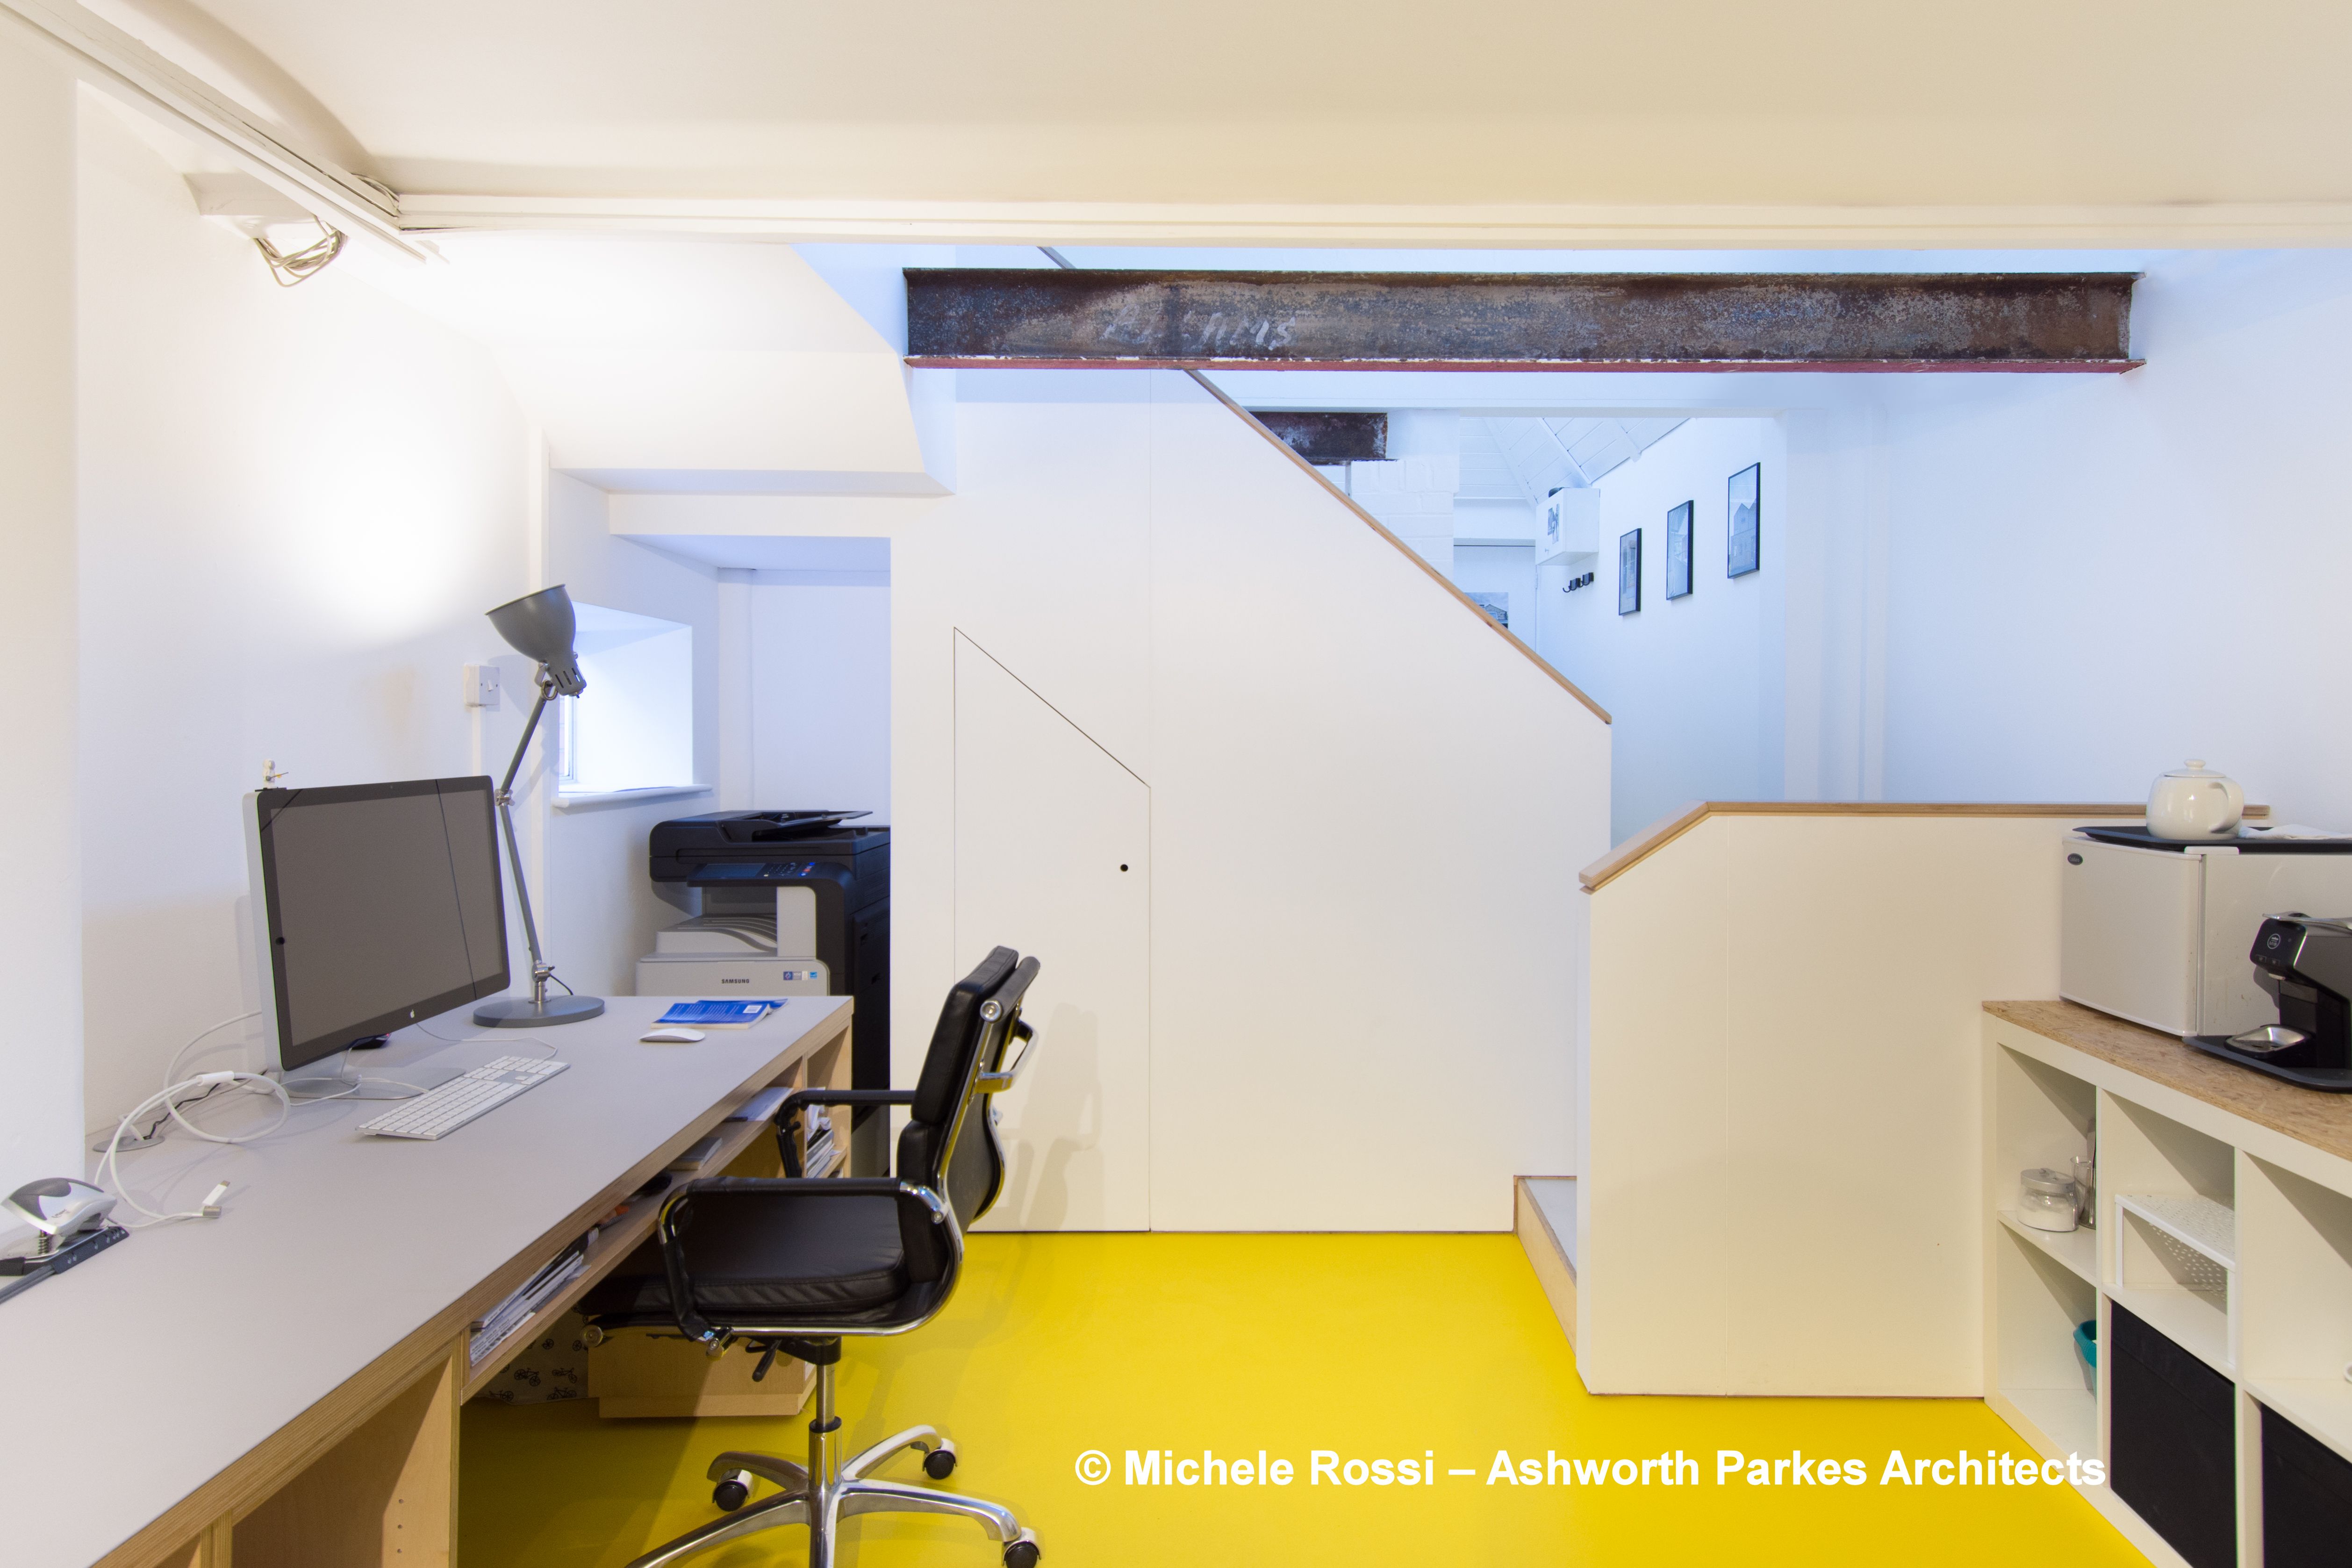 Case Study: 	Ashworth Parkes Architects office